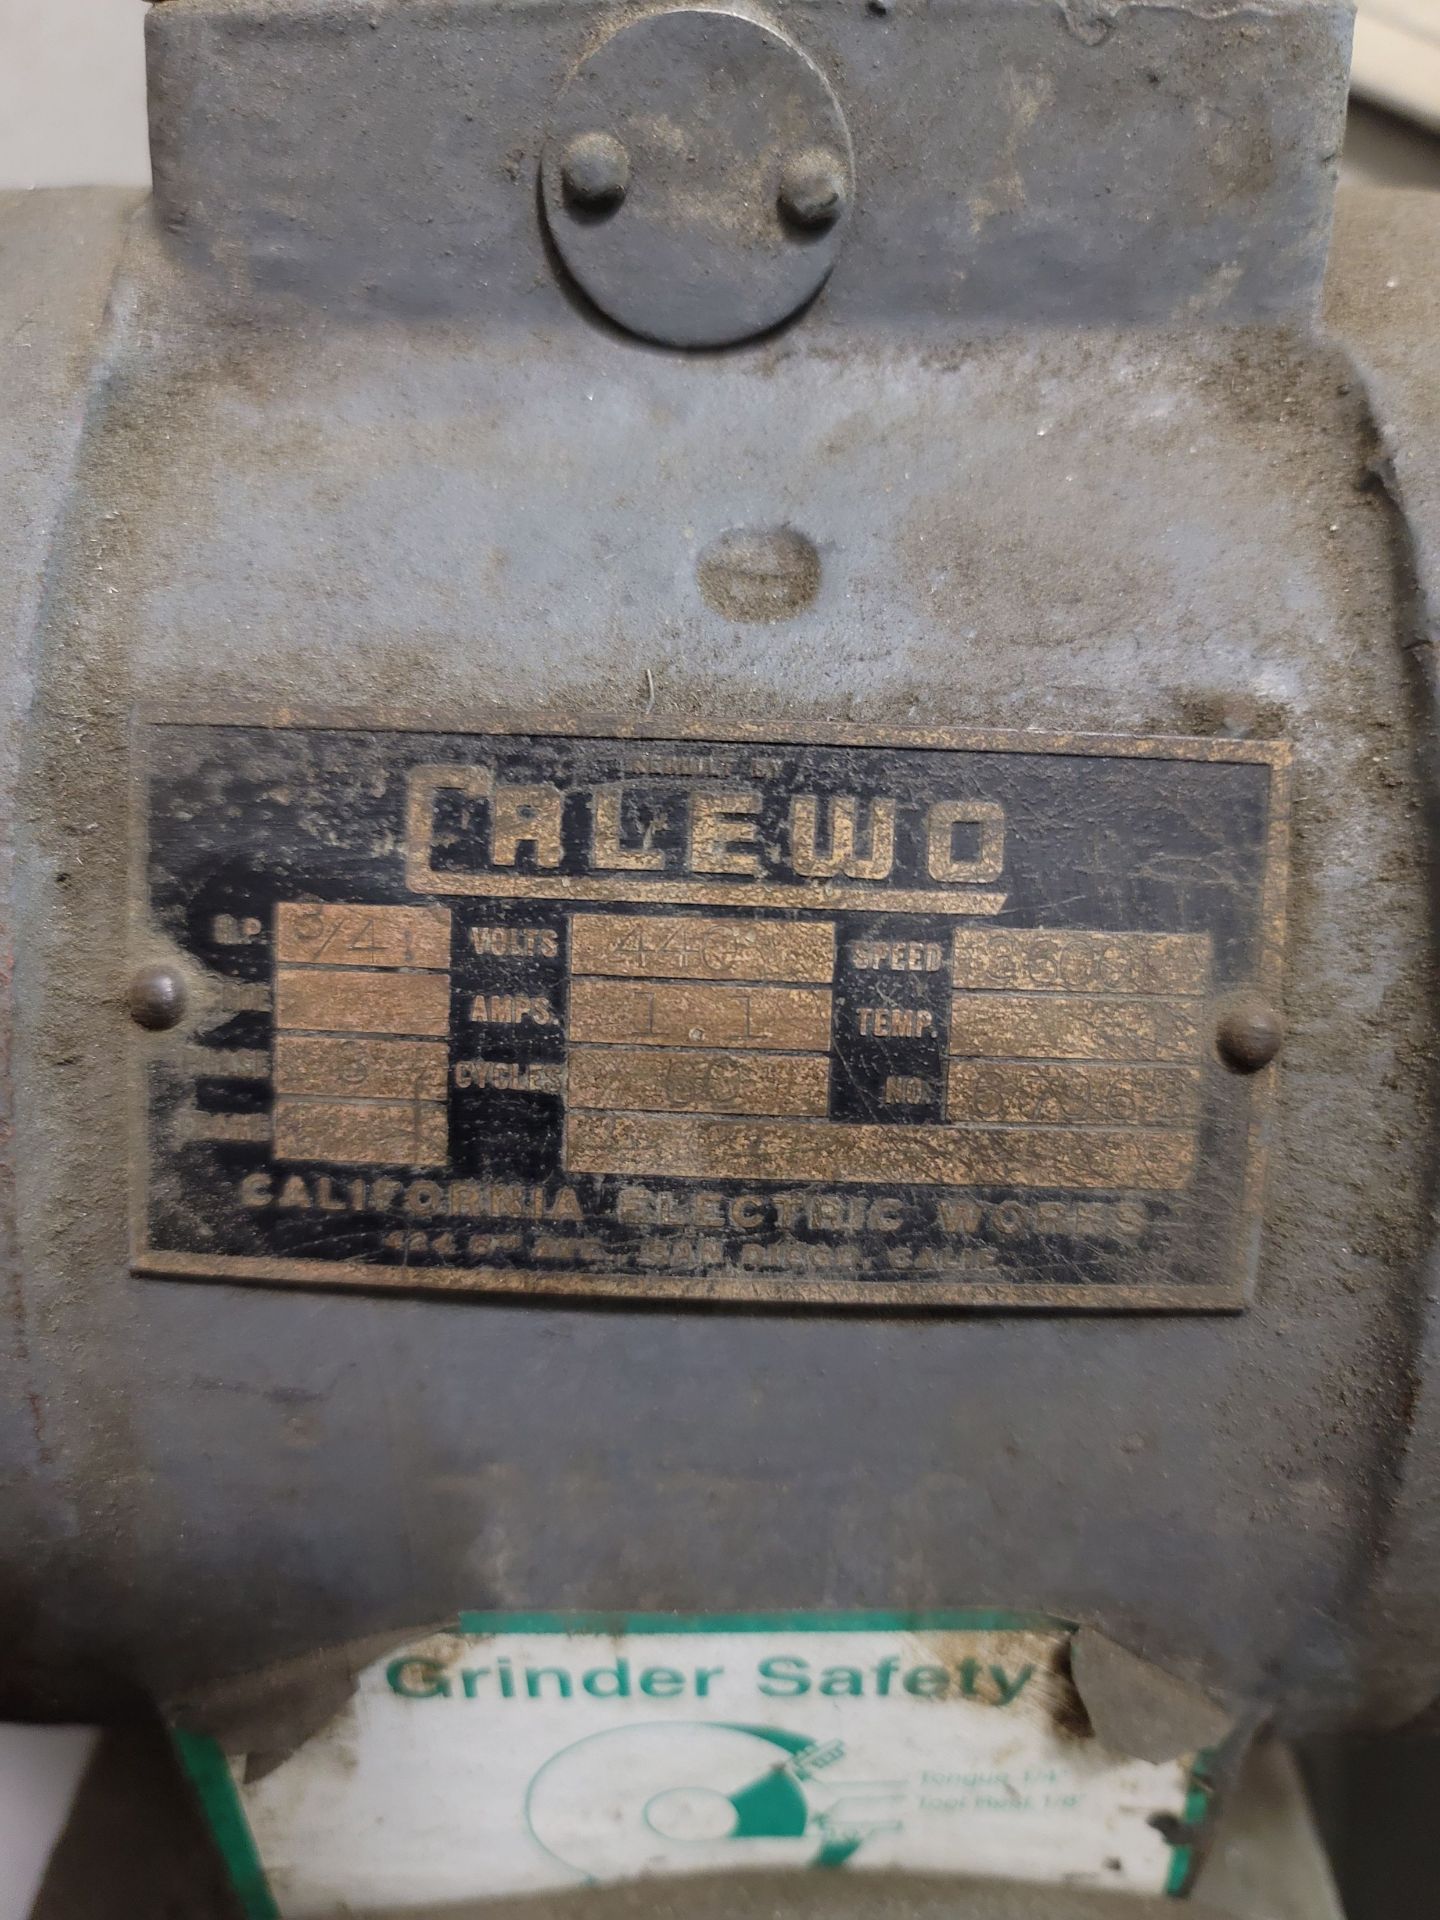 CALEWO DOUBLE END PEDESTAL GRINDER, 3/4 HP - Image 2 of 2